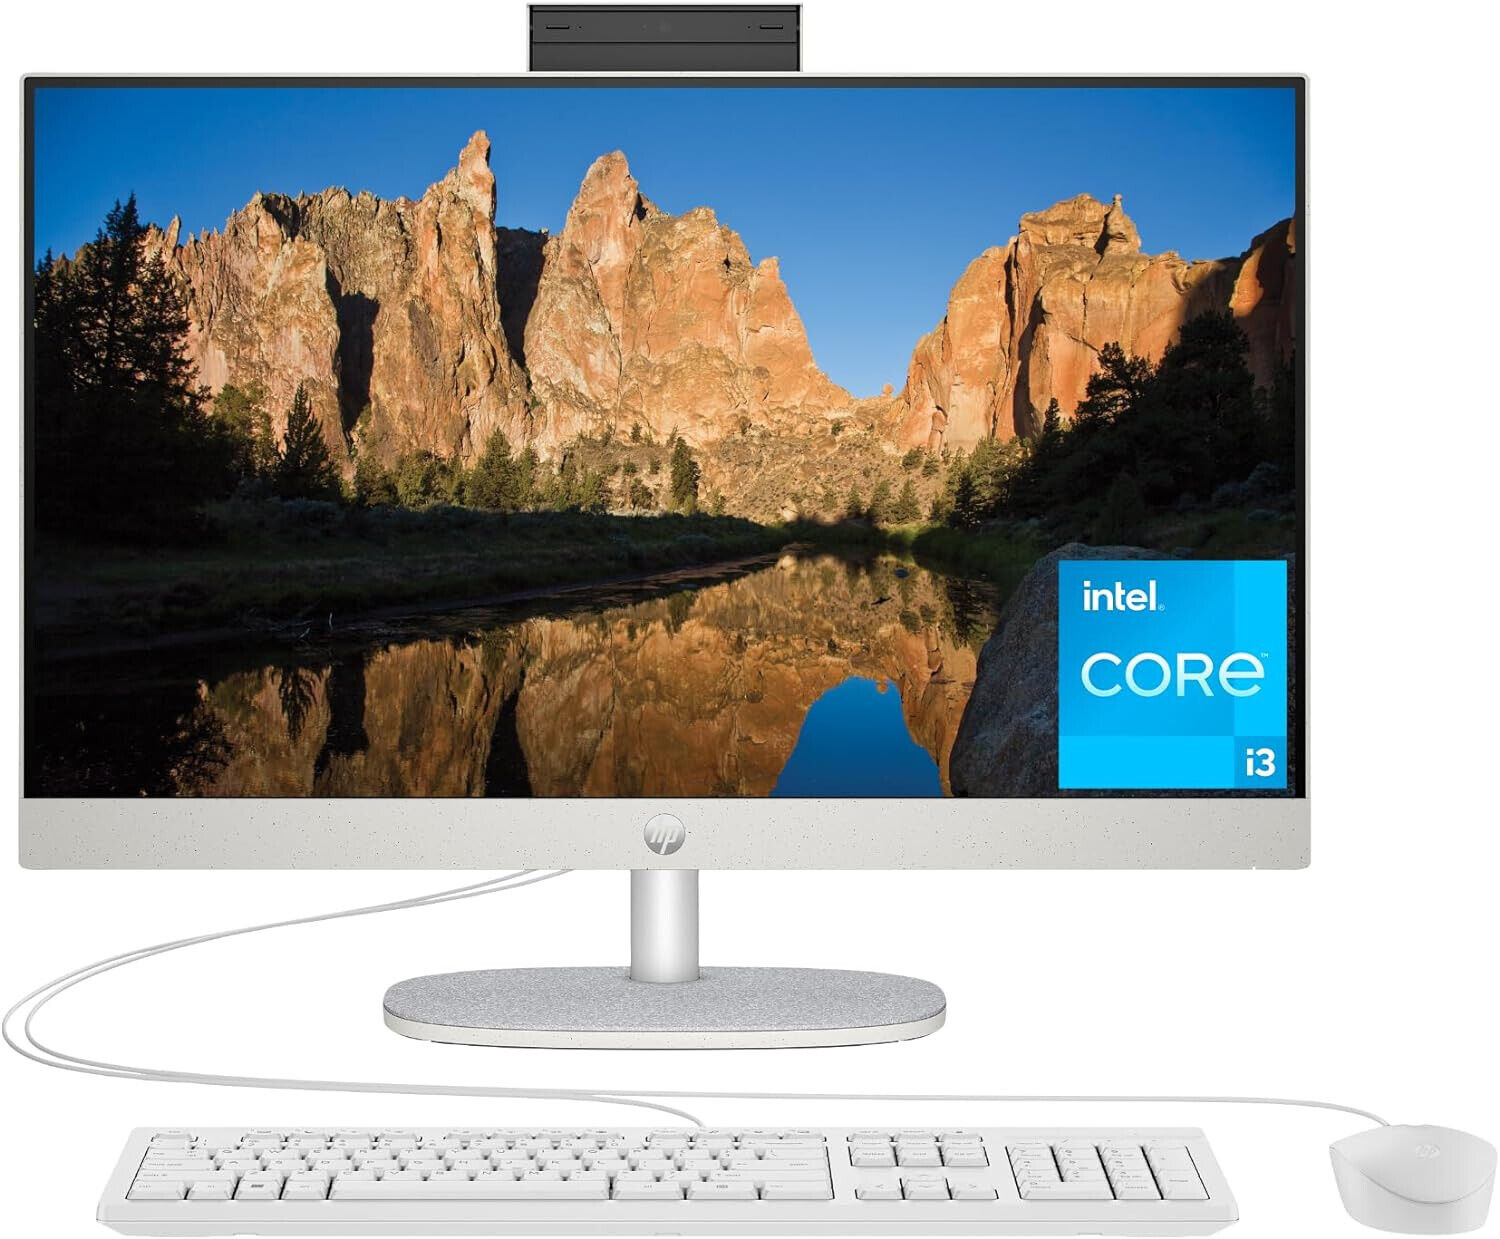 HP 23.8 inch All-in-One Desktop PC